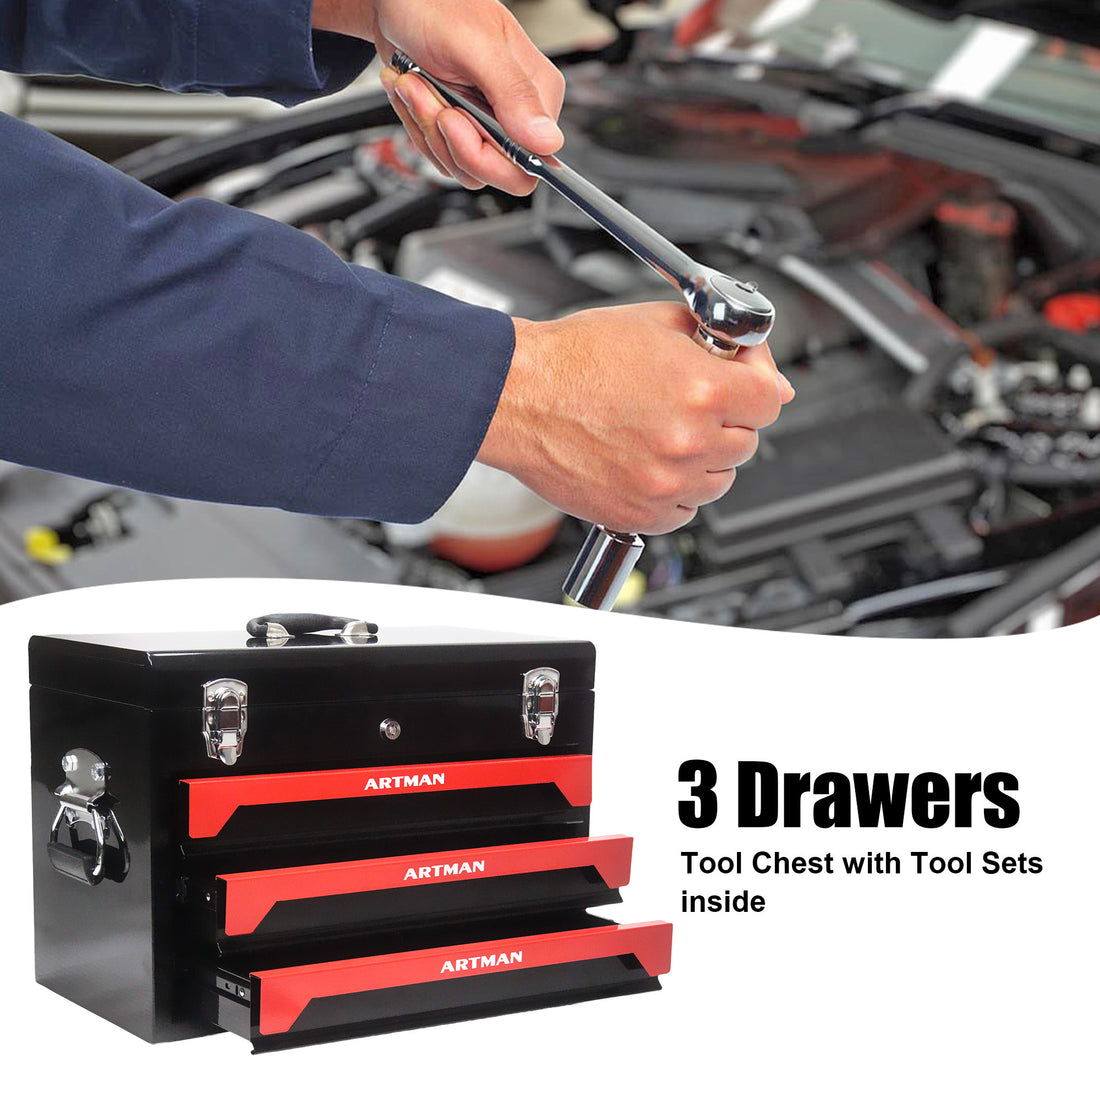 3 Drawers Tool Box With Tool Set - Black Steel